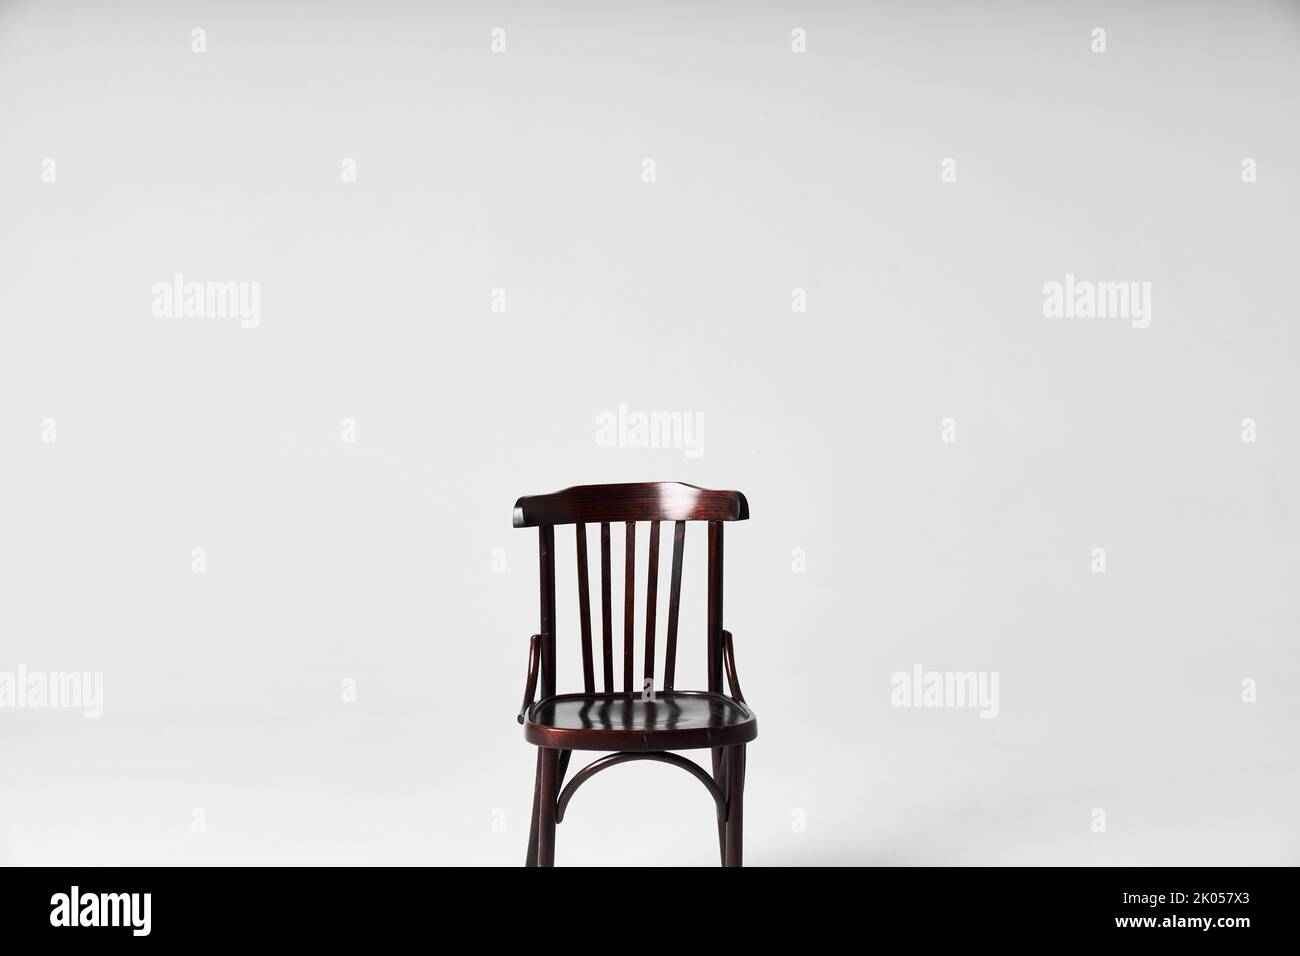 Dark chair on cyclorama under flash light Stock Photo